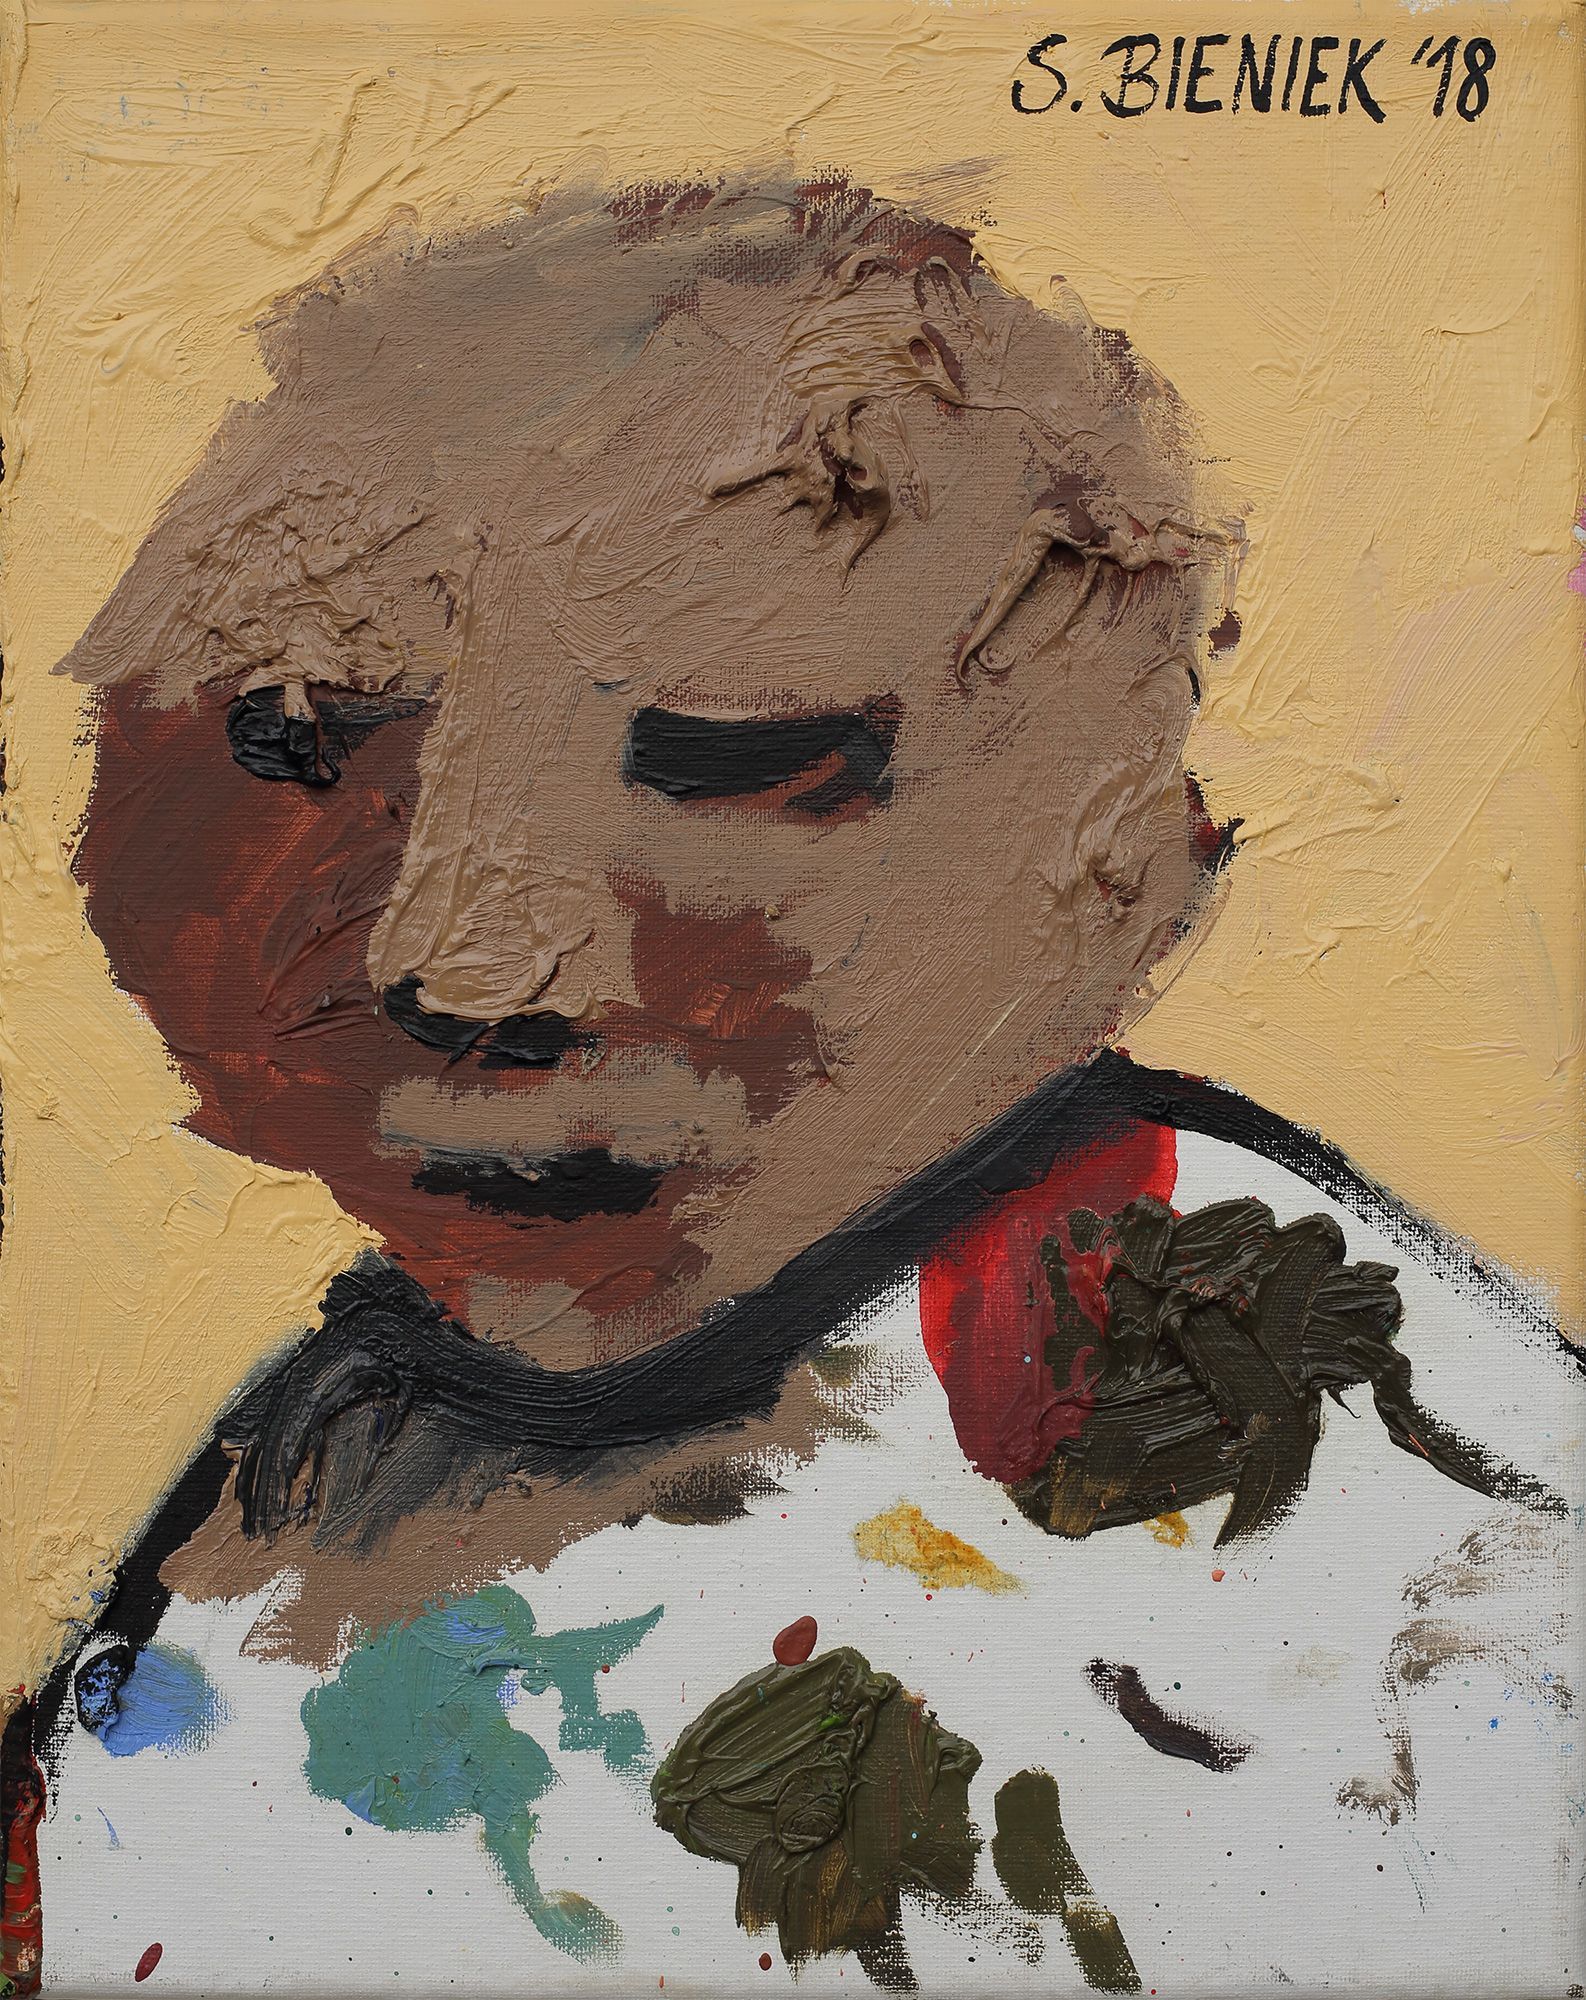 „Face no. 23“, by Sebastian Bieniek (B1EN1EK), 2018. Oil on canvas. 30 x 24 cm. From the 